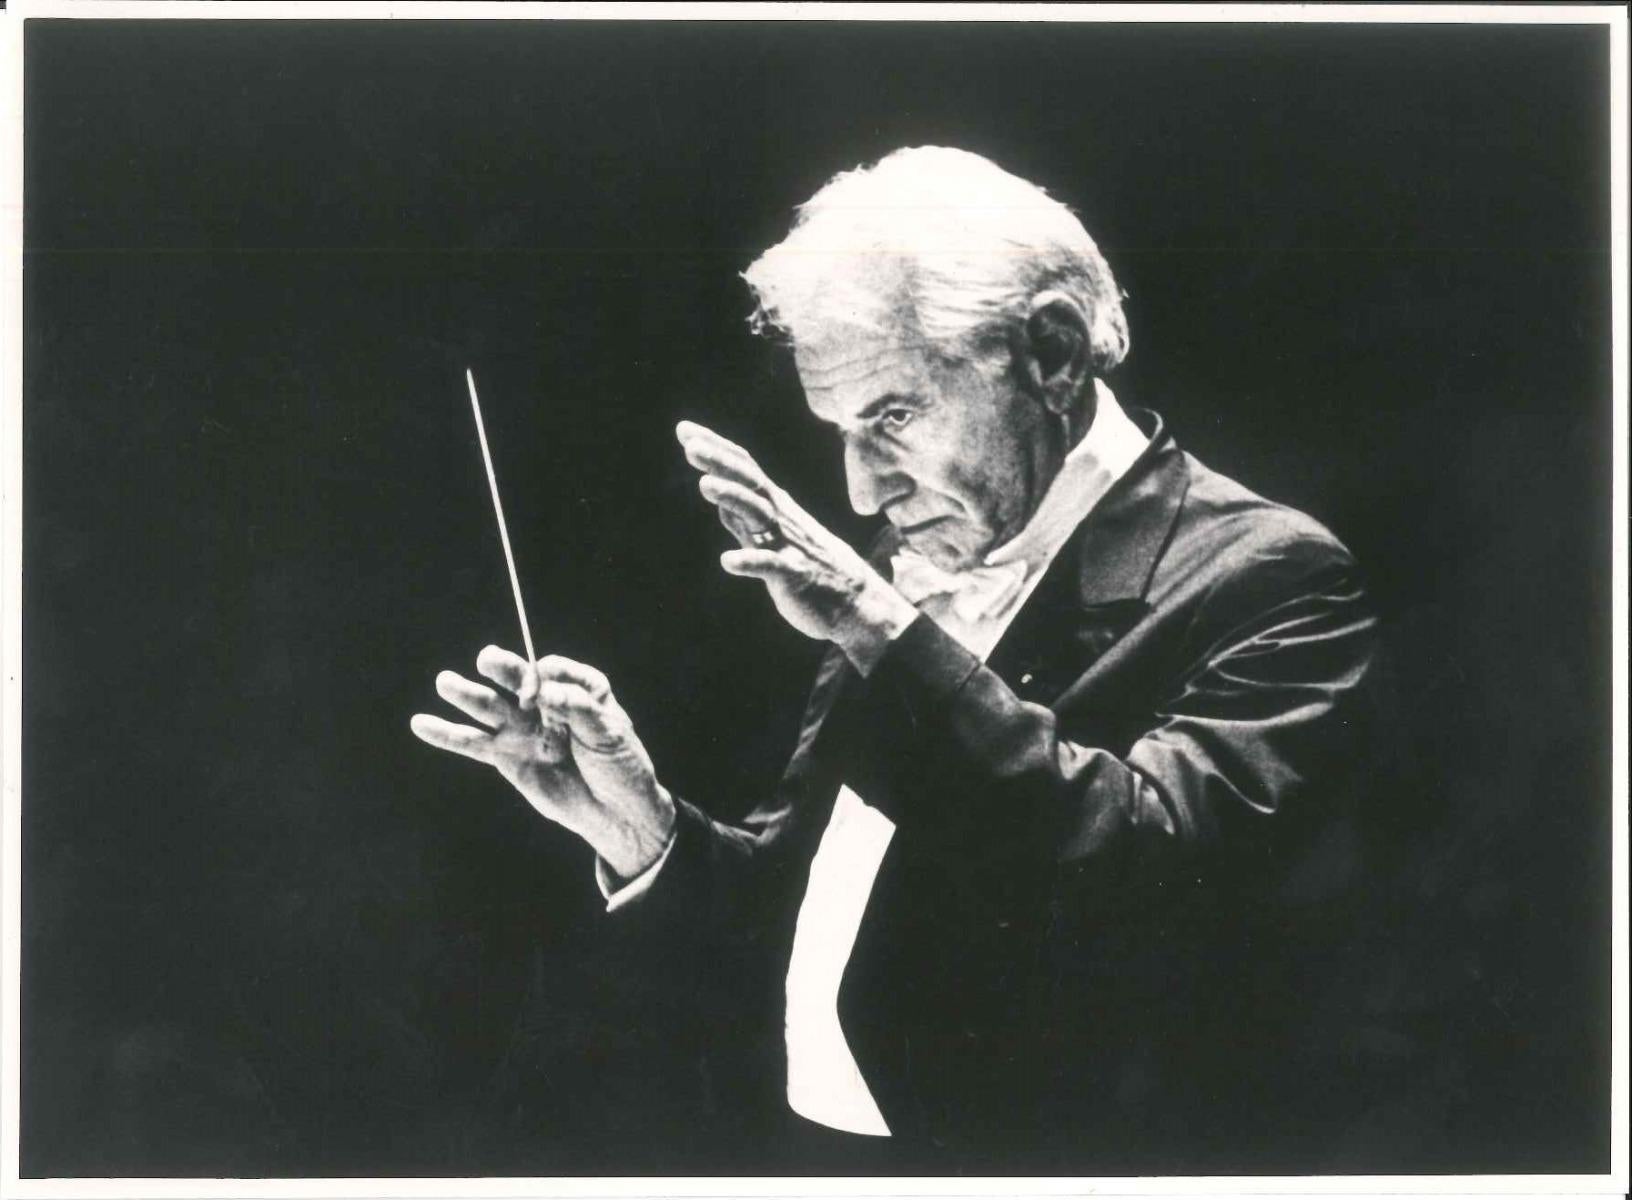 Unknown Figurative Photograph - Portrait of Leonard Bernstein - Original B/W Photograph - Early 1980s